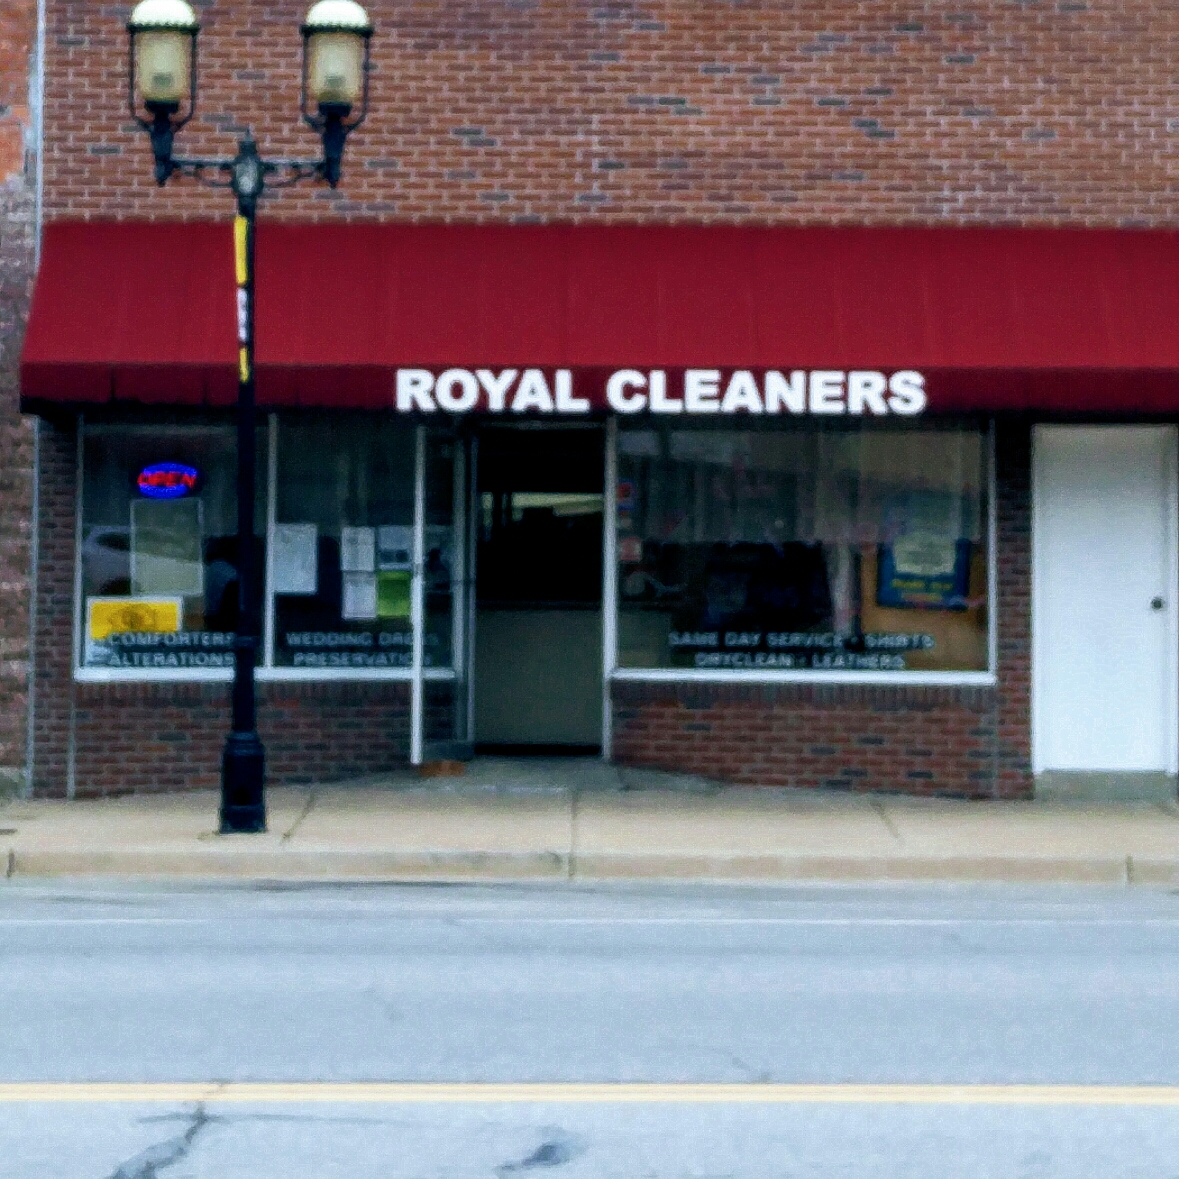 Royal cleaners 125 S Main St, Ottawa Kansas 66067